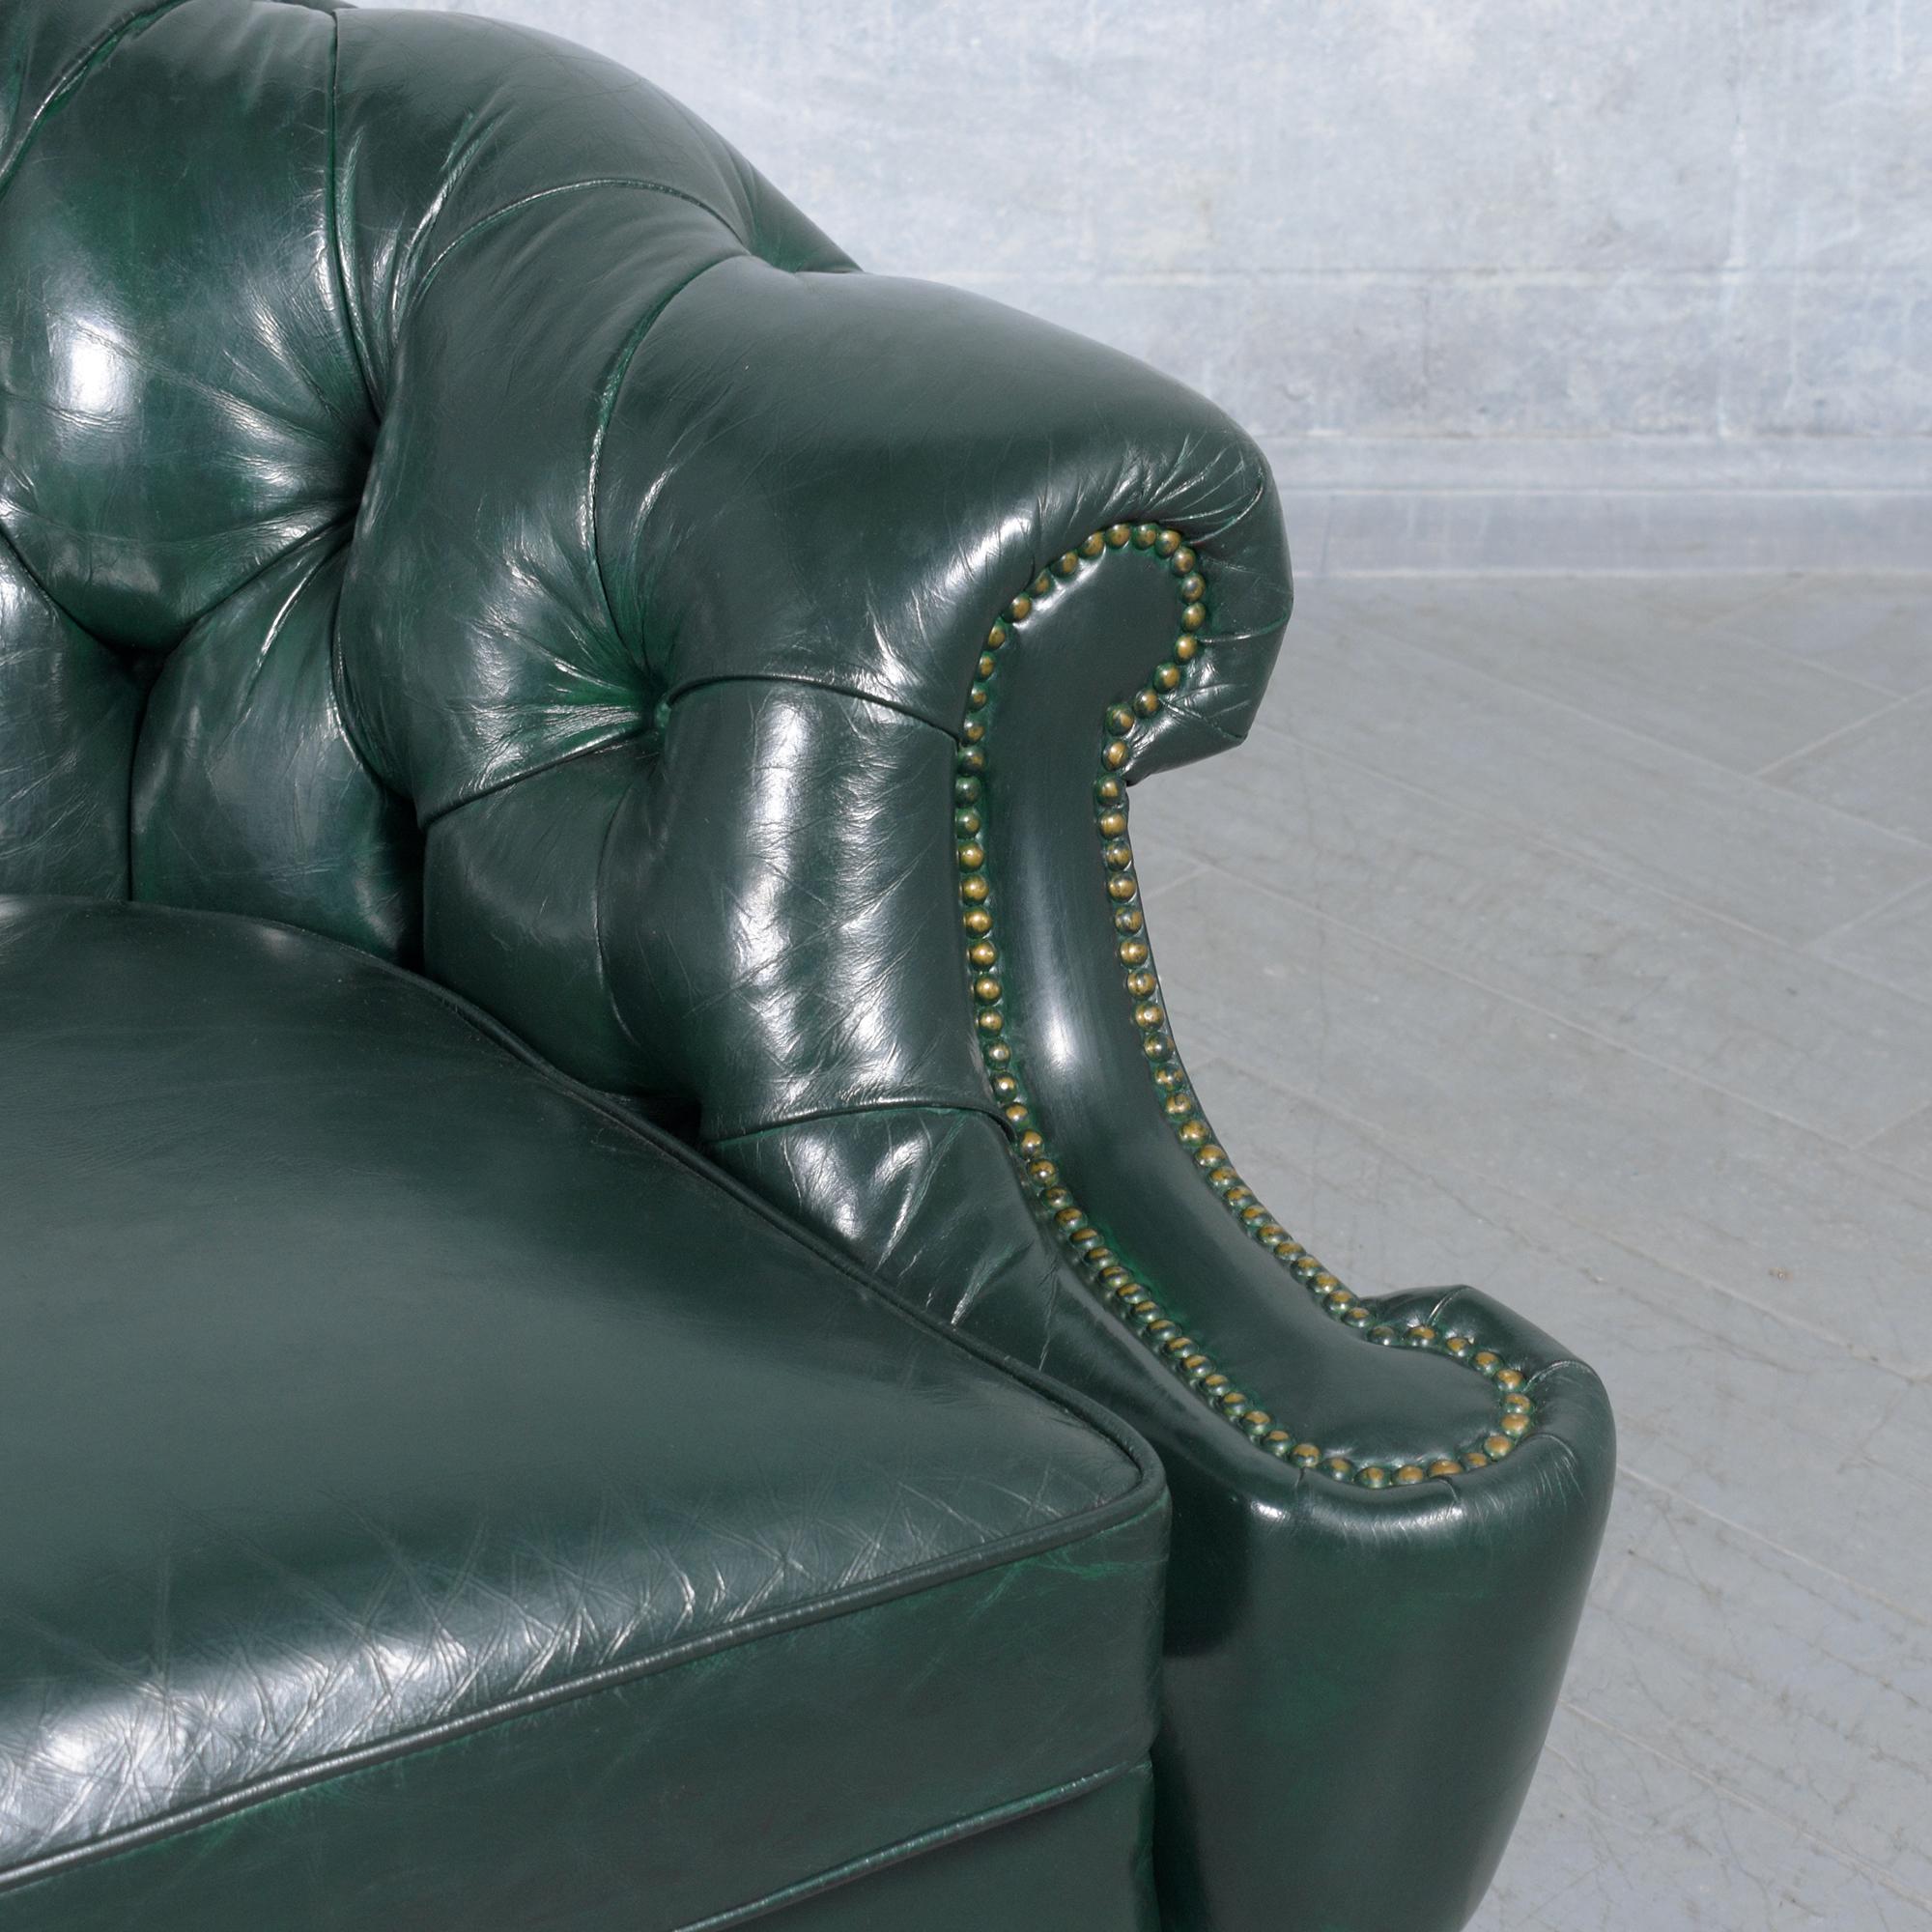 Refurbished 1970s Emerald Green Italian Chesterfield Sofa - Vintage Elegance 2